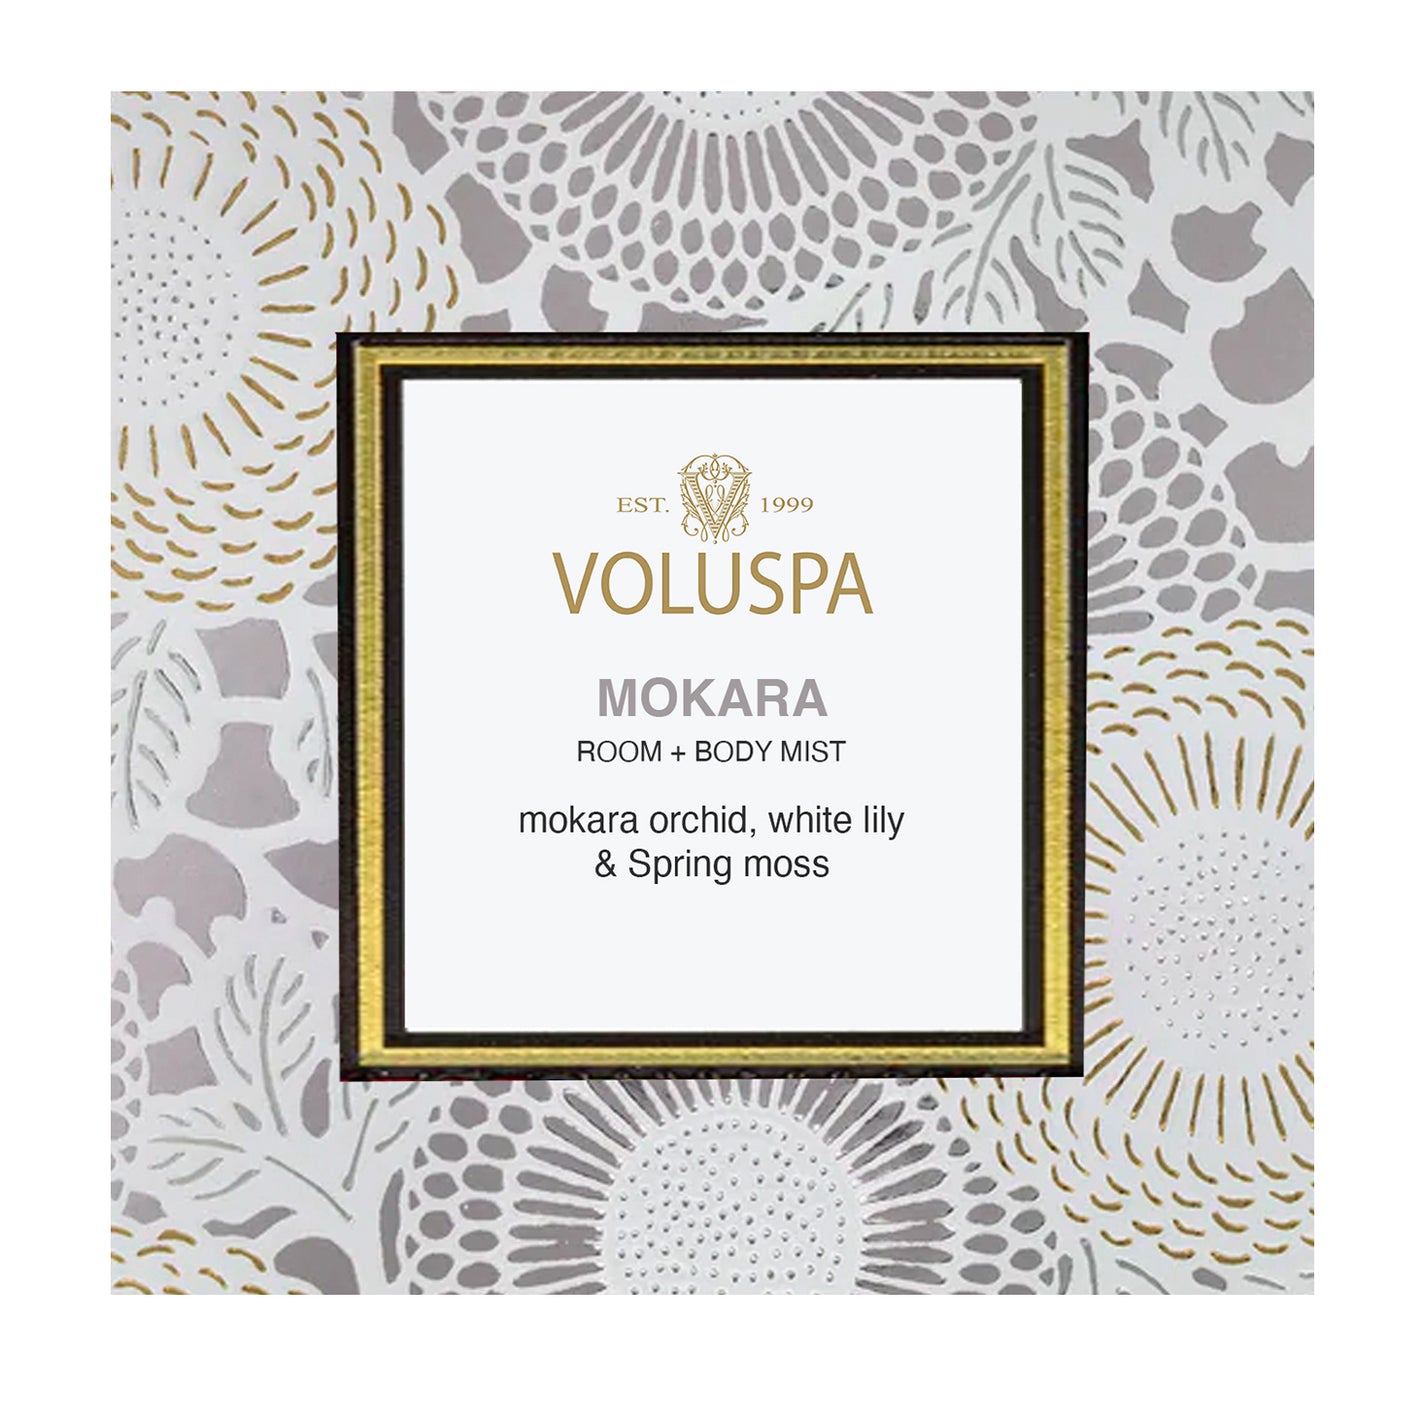 VOLUSPA Mokara Room + Body Mist